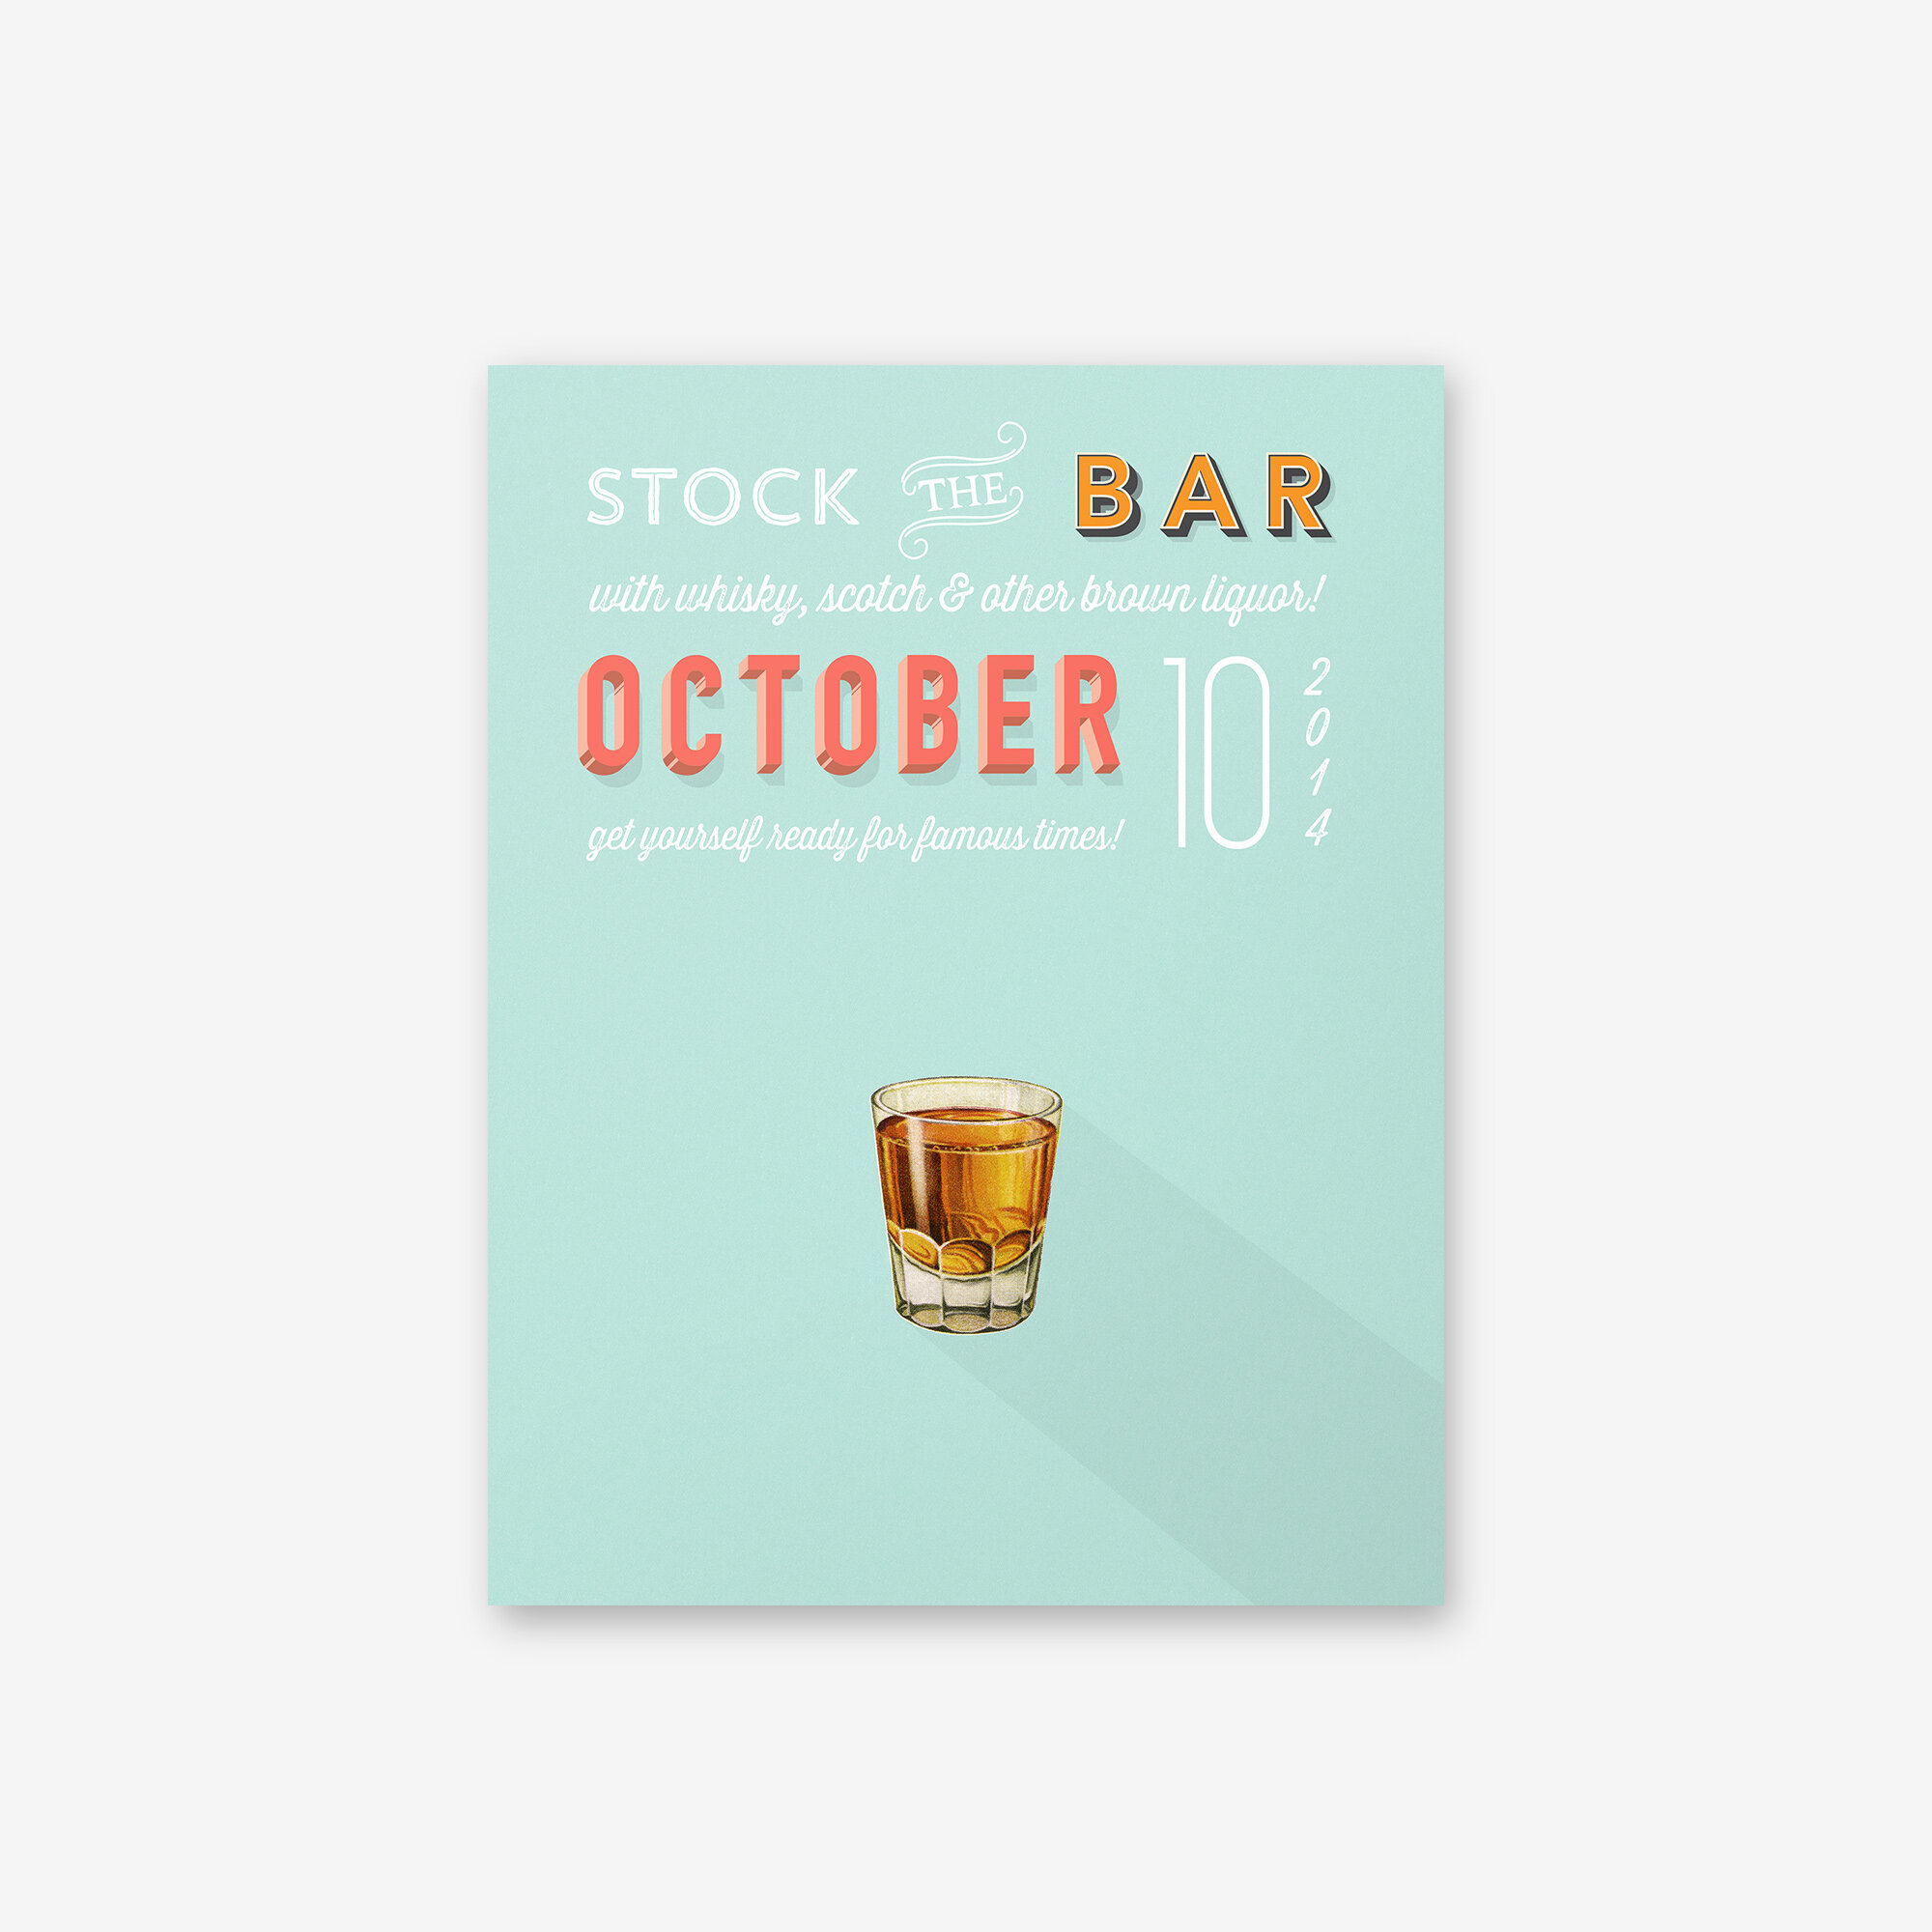 BVH_Posters_Stock+the+Bar_Scotch.jpg